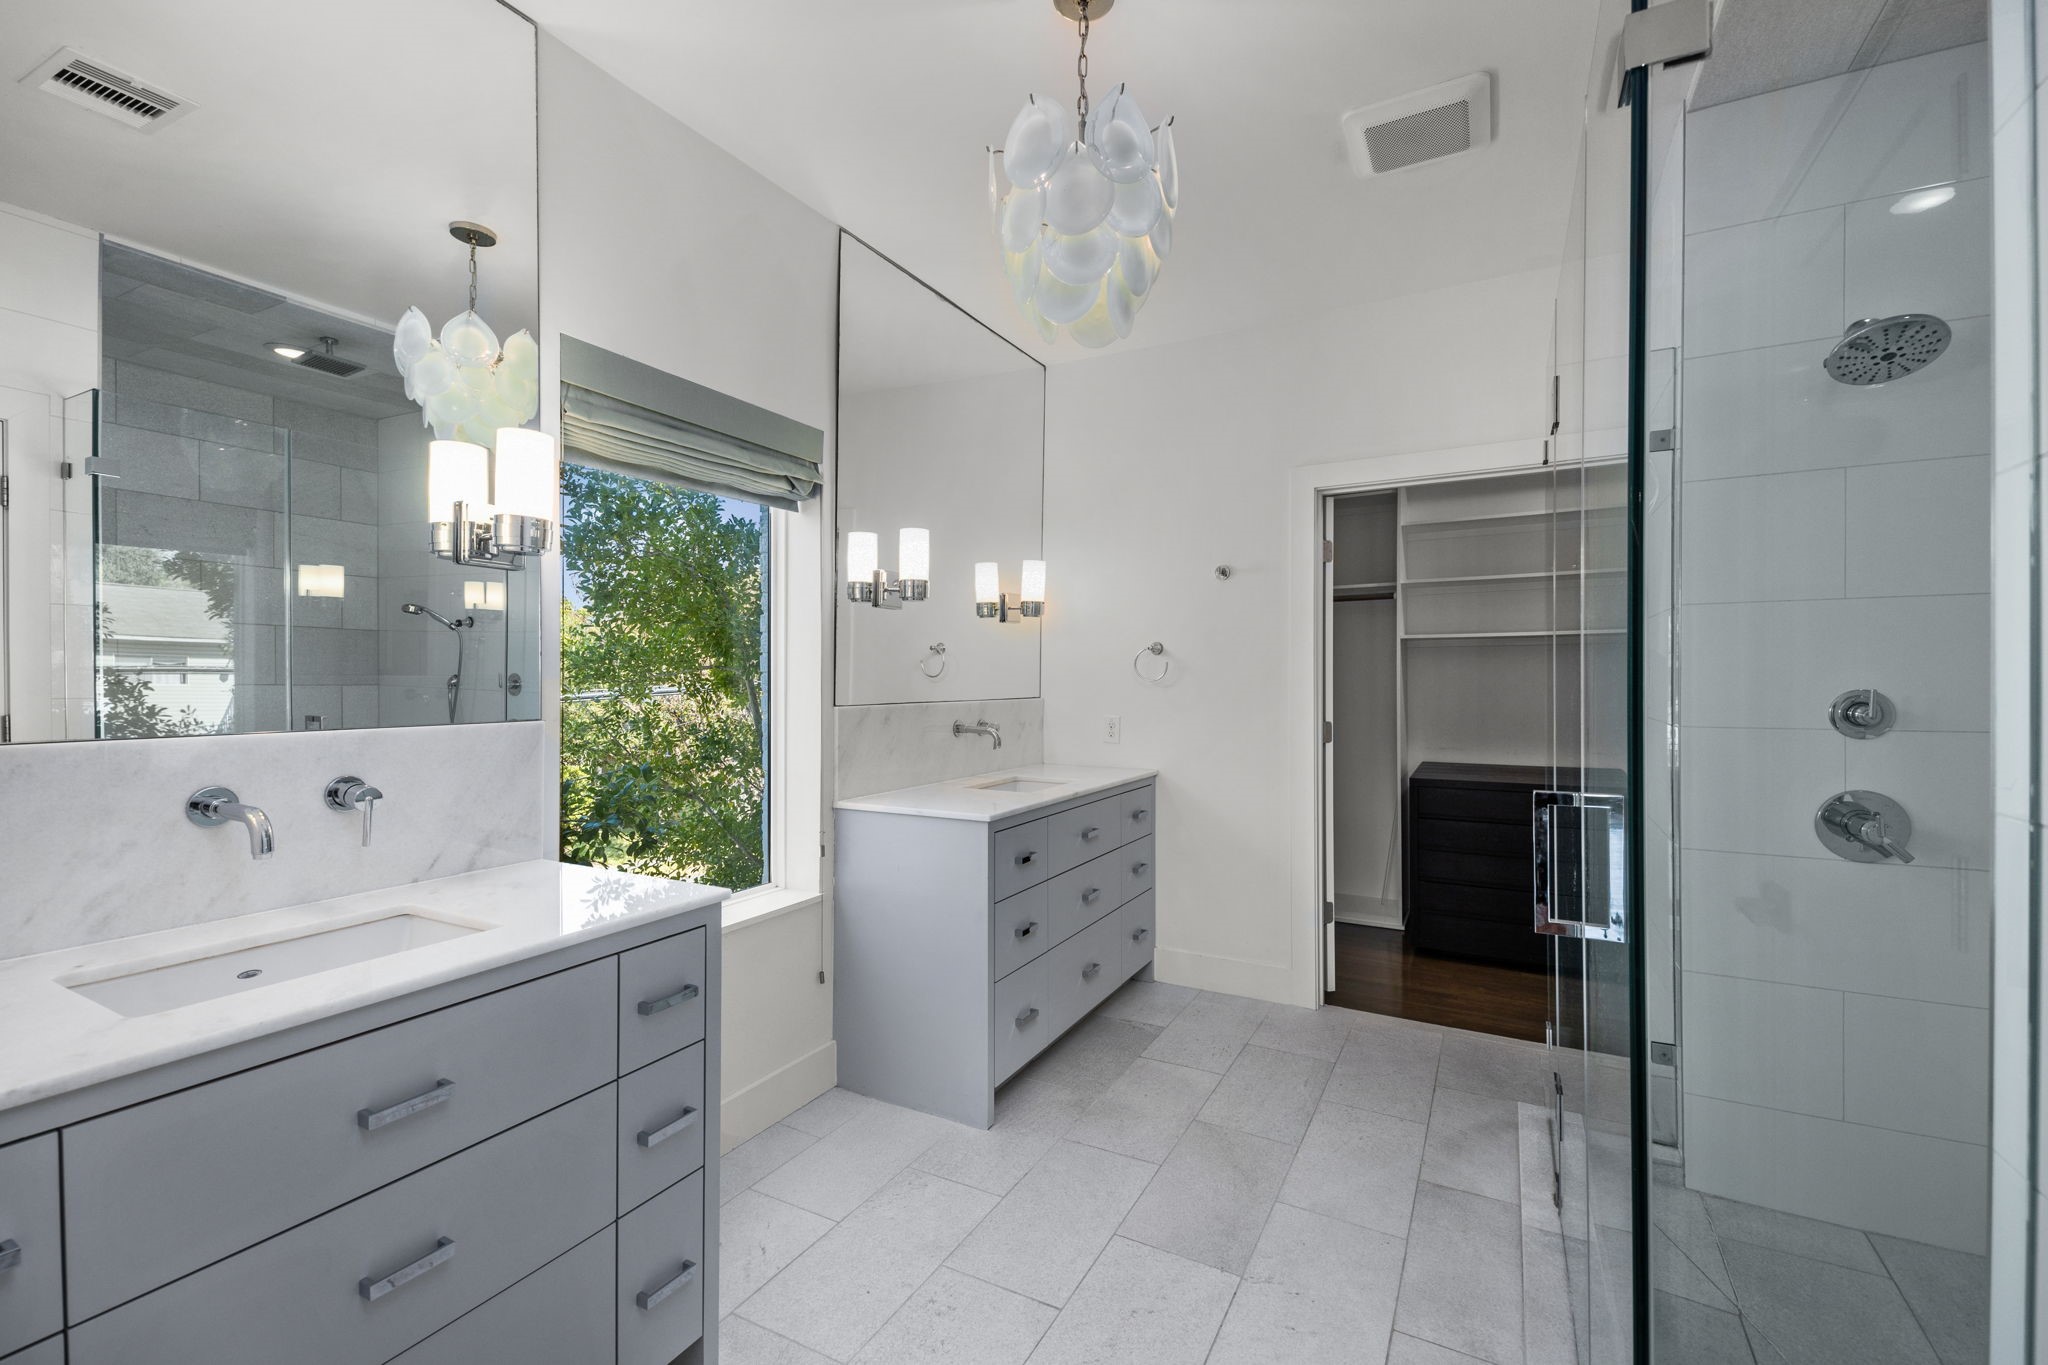 Exquisite primary bathroom features dual vanities, designer lighting, freestanding tub, and frameless glass shower.